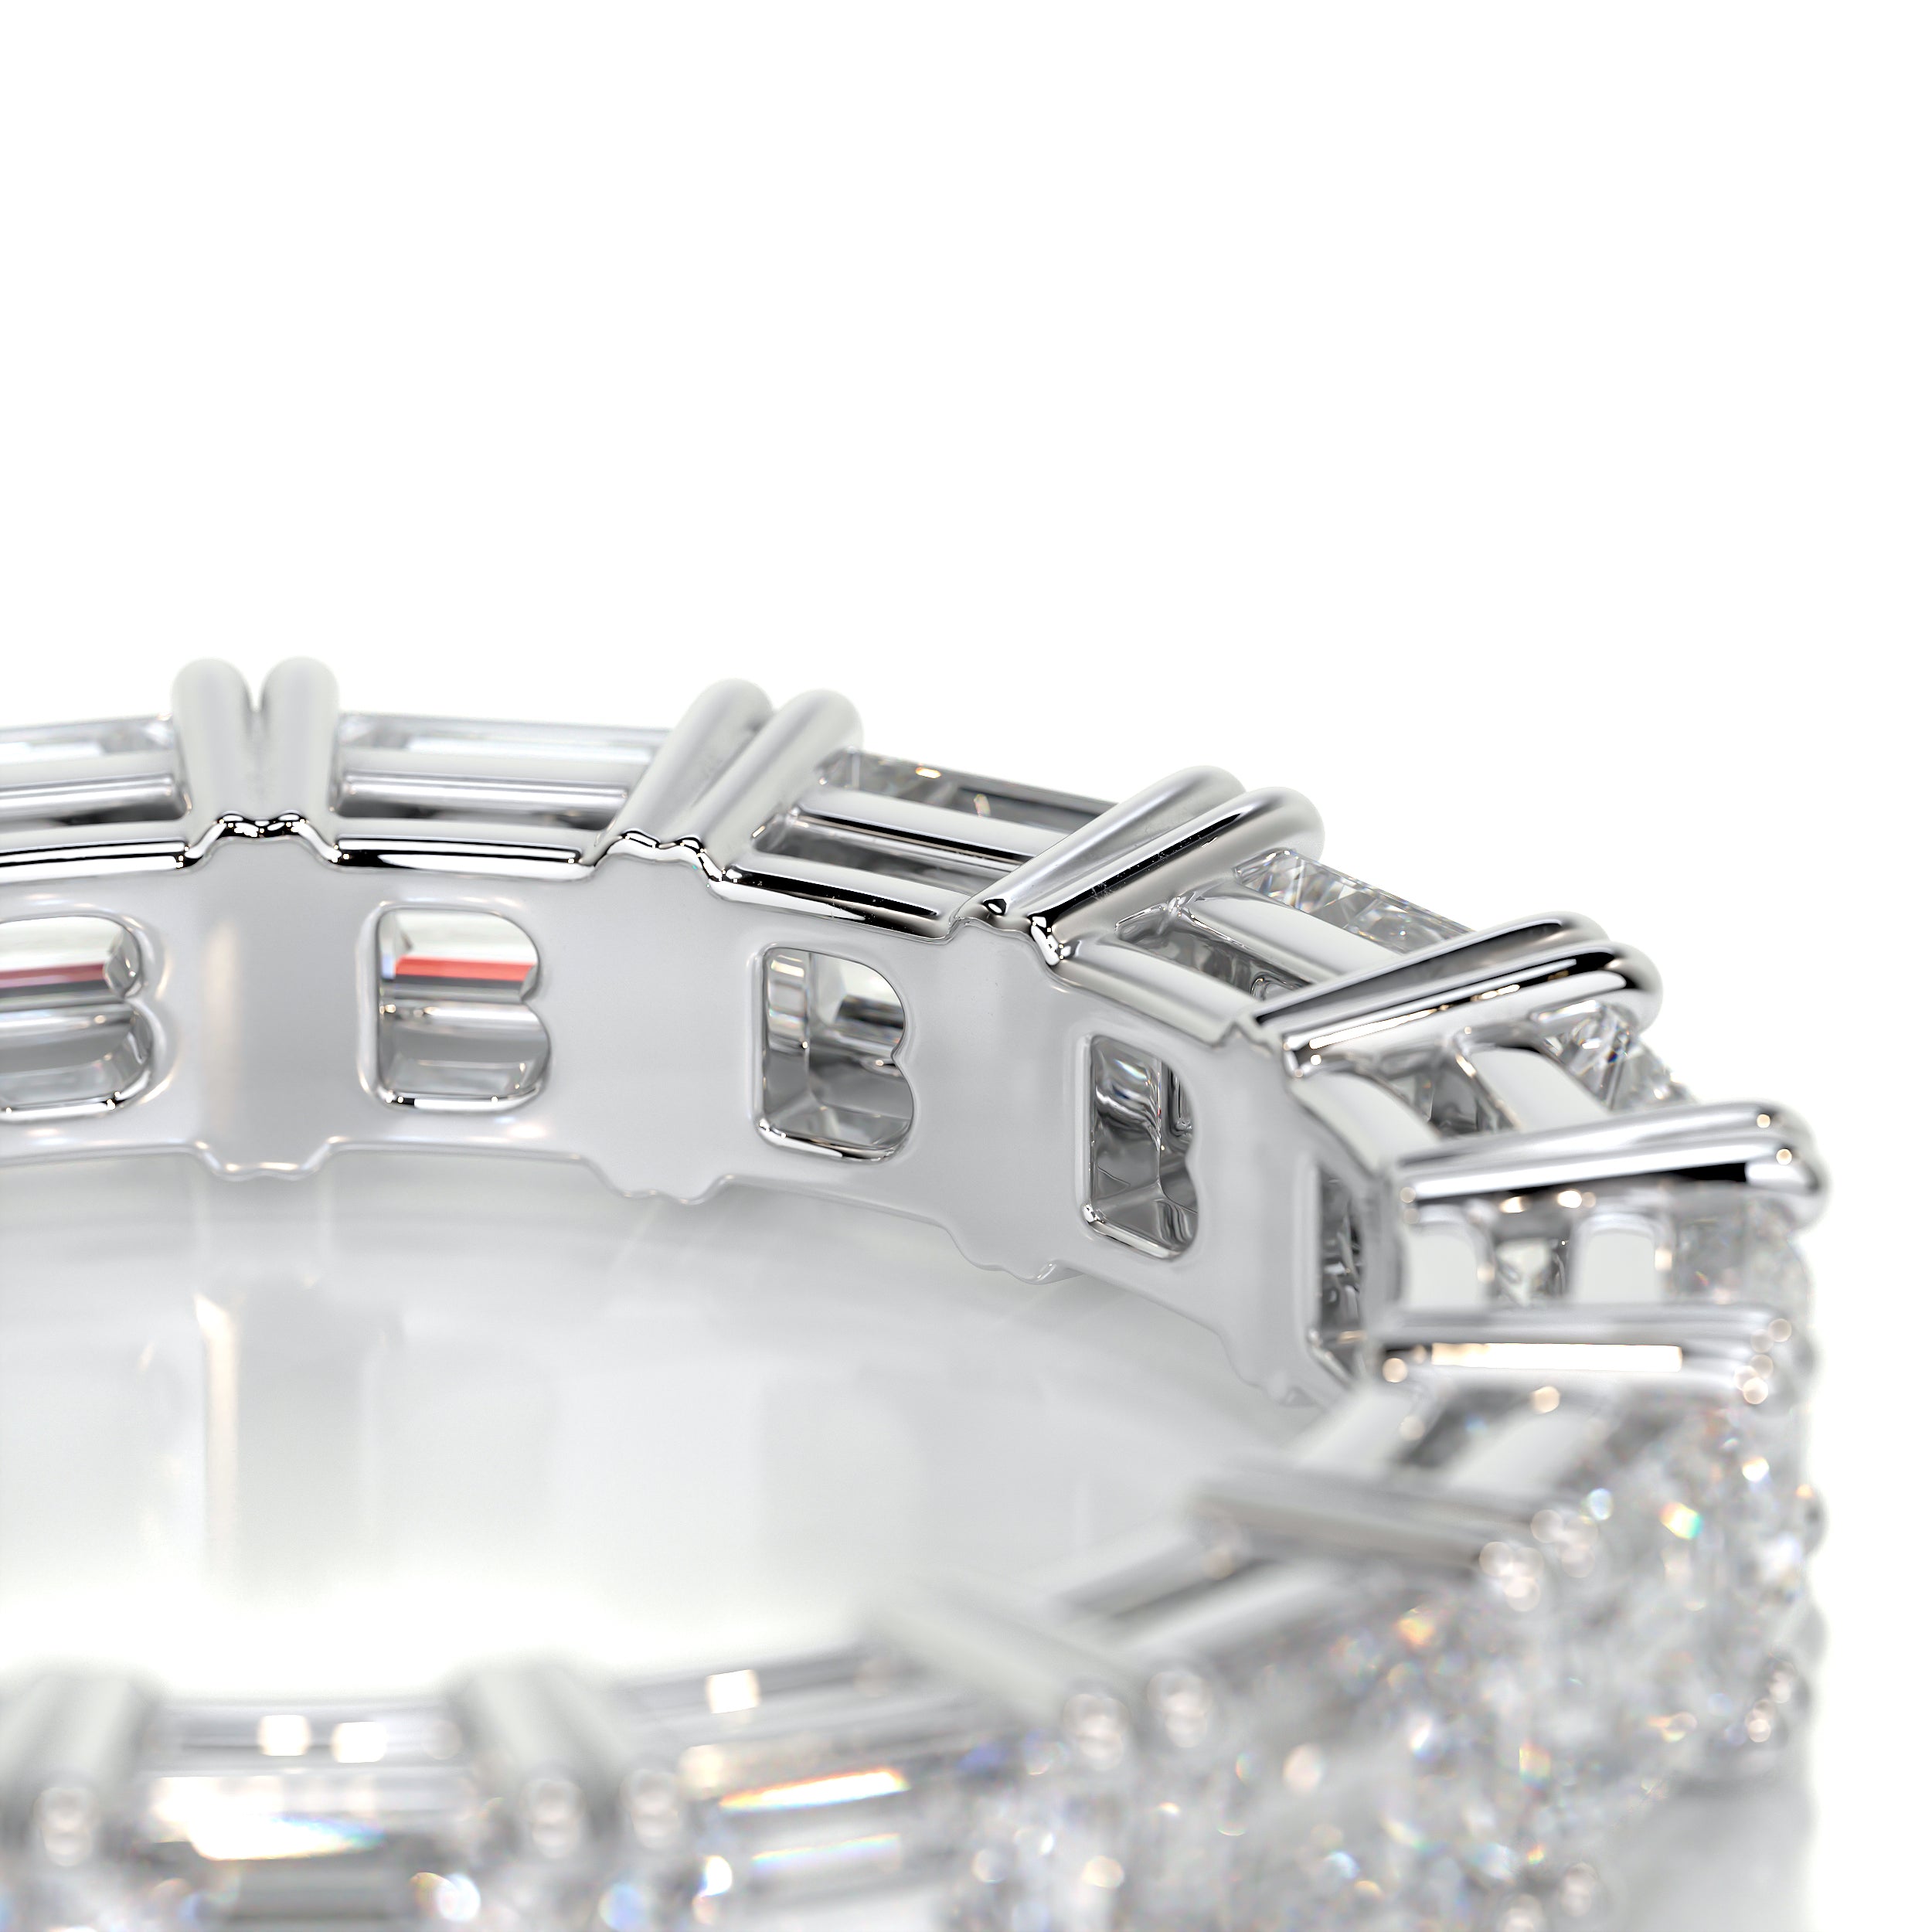 Vicky Diamond Wedding Ring -Platinum